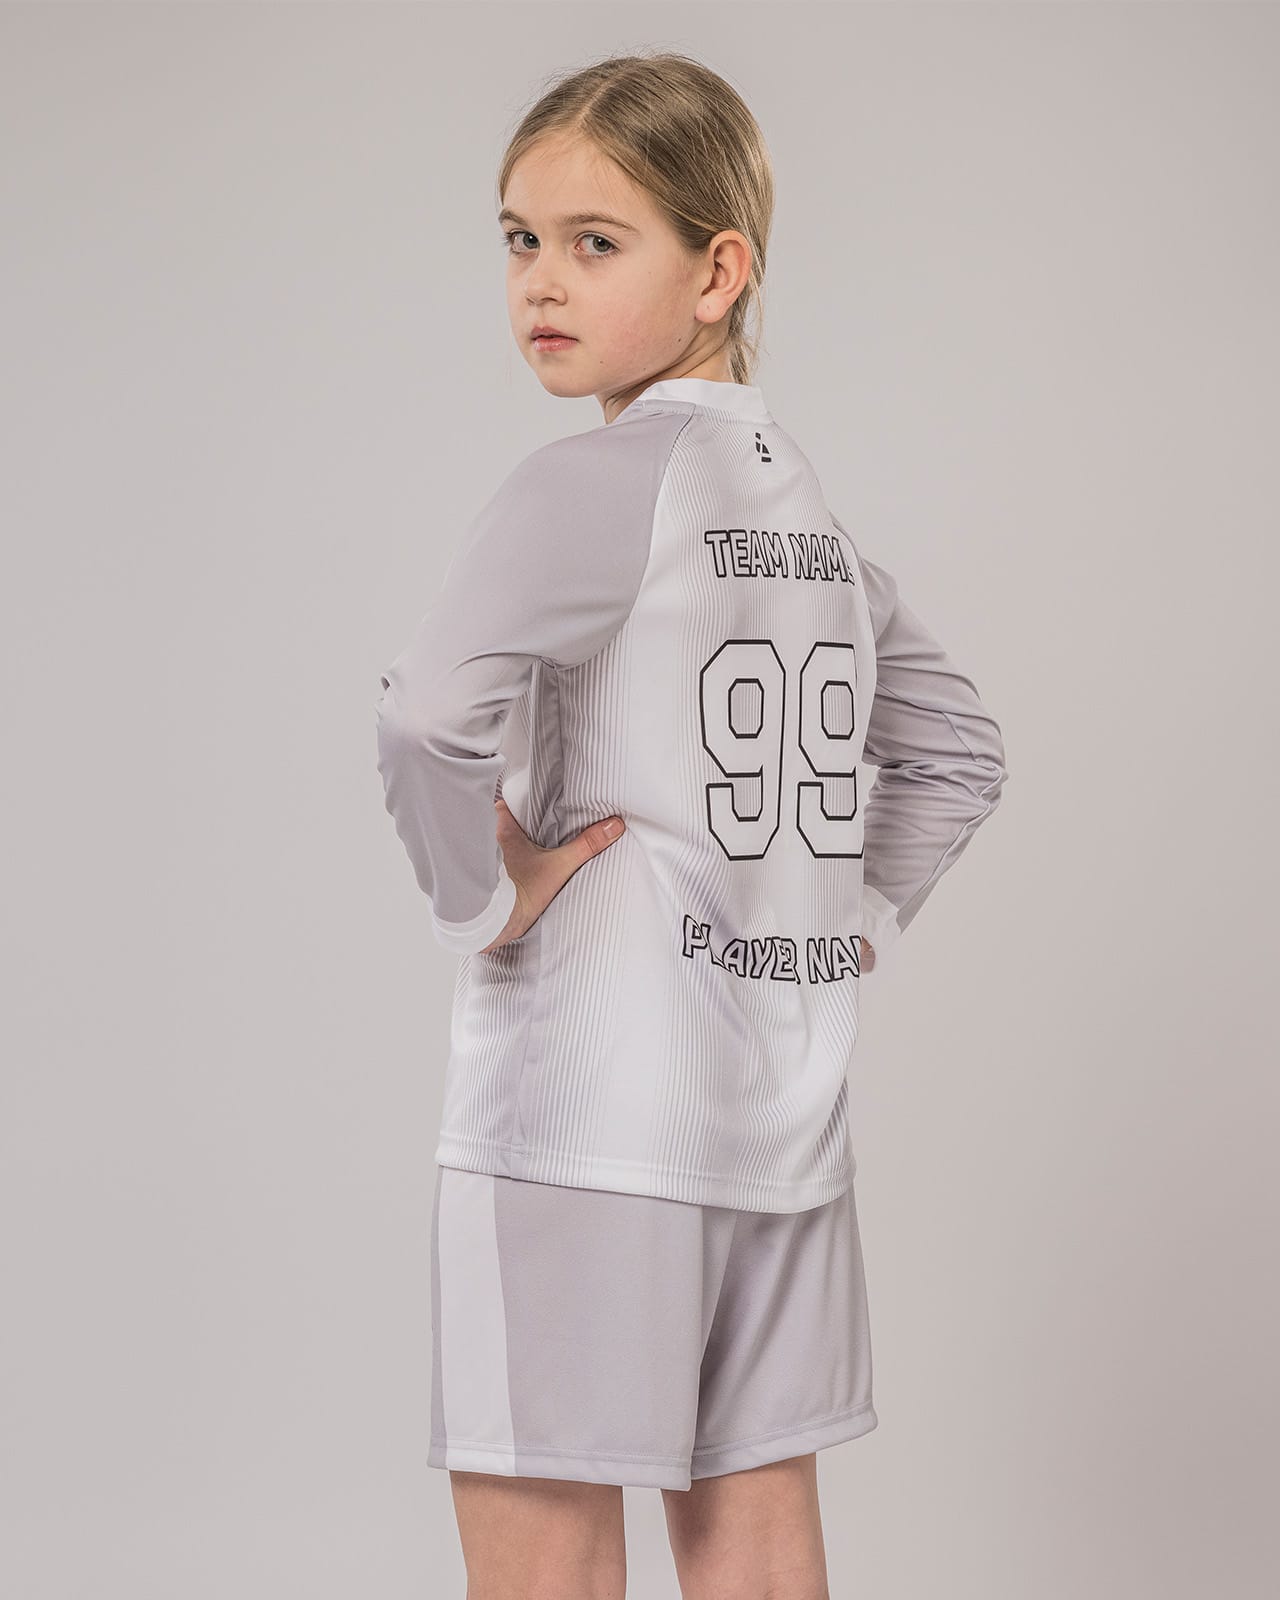 Rio children’s long-sleeved football jersey